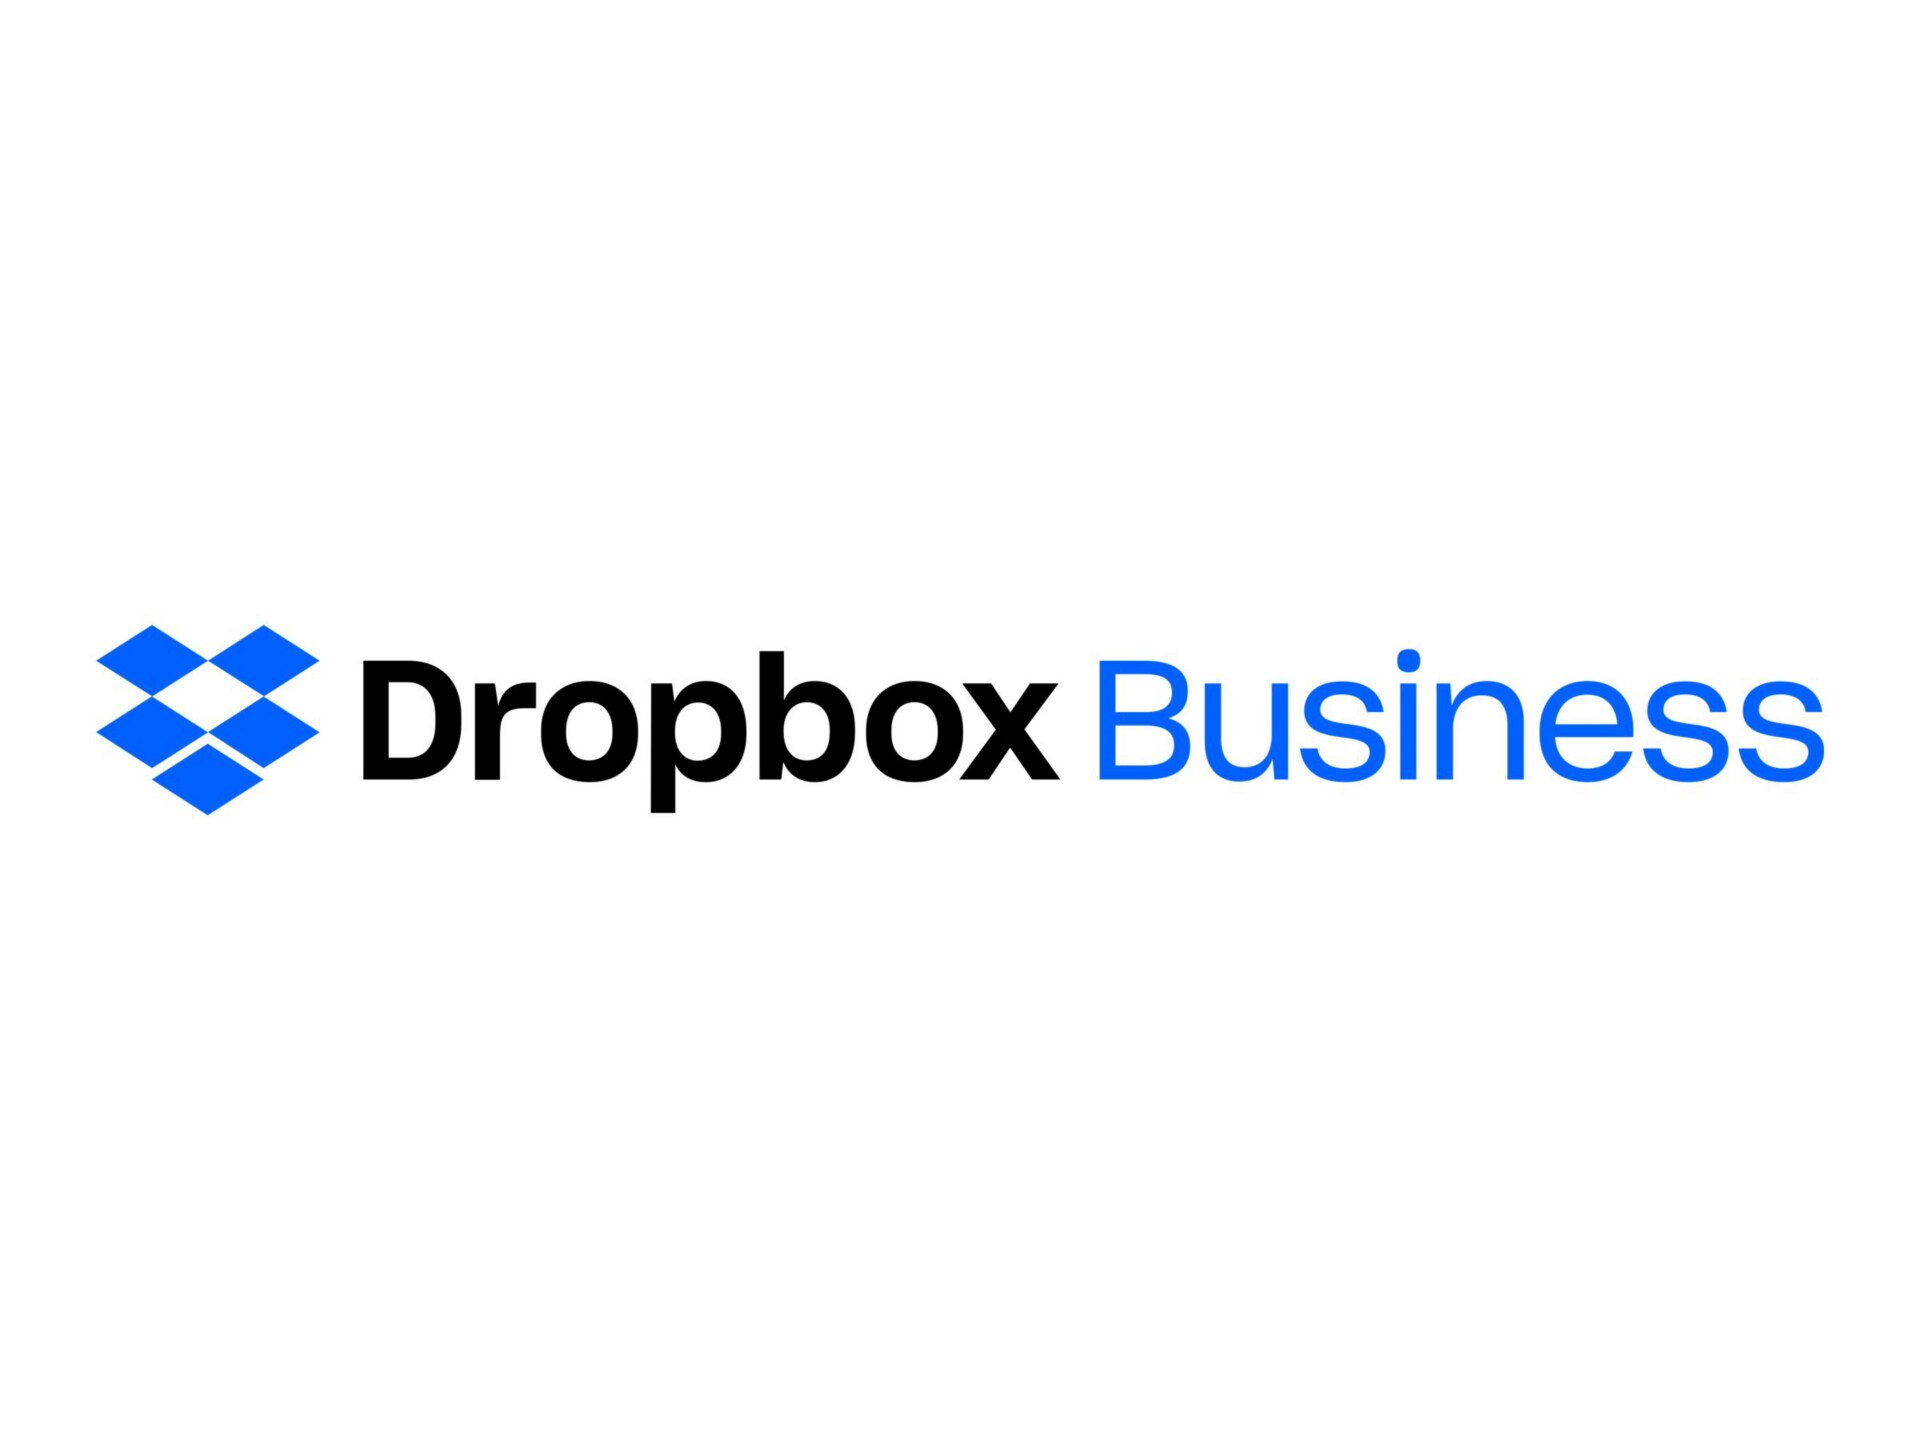 Dropbox Business Enterprise - subscription upgrade license (3 months) - 1 user